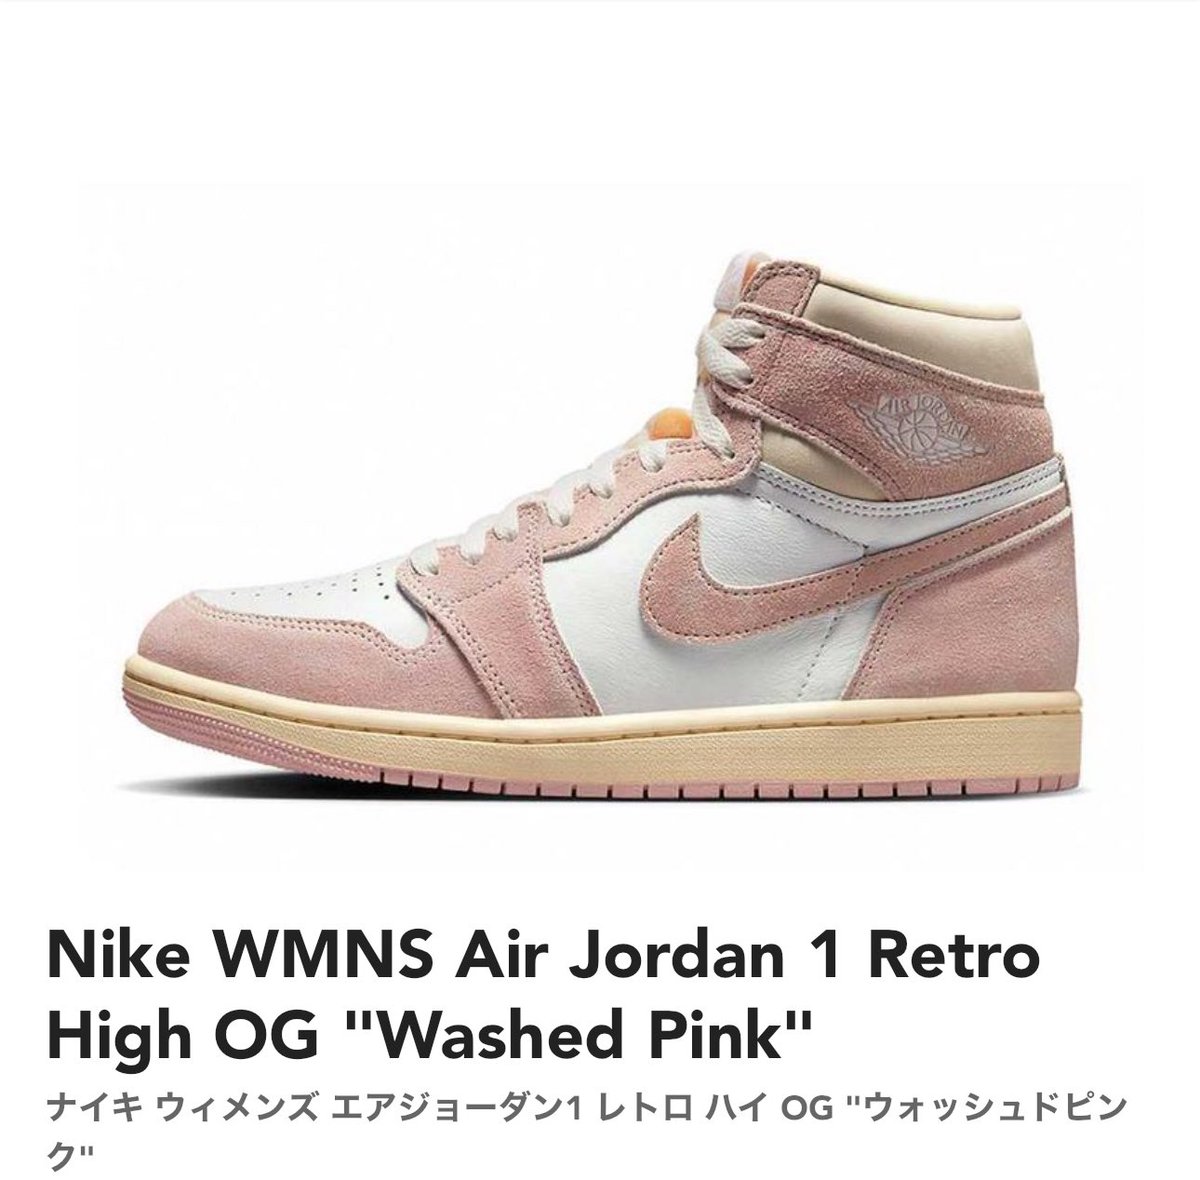 routo-harajuku」 Twitter開設企画
🎁フォロワー様プレゼント企画🎁

第5弾

Nike WMNS Air Jordan 1 Retro High OG 'Washed Pink'

*当選者のマイ(希望)サイズをプレゼント致します！

(条件)こちらのアカウントのフォローとリツイートのみ。…